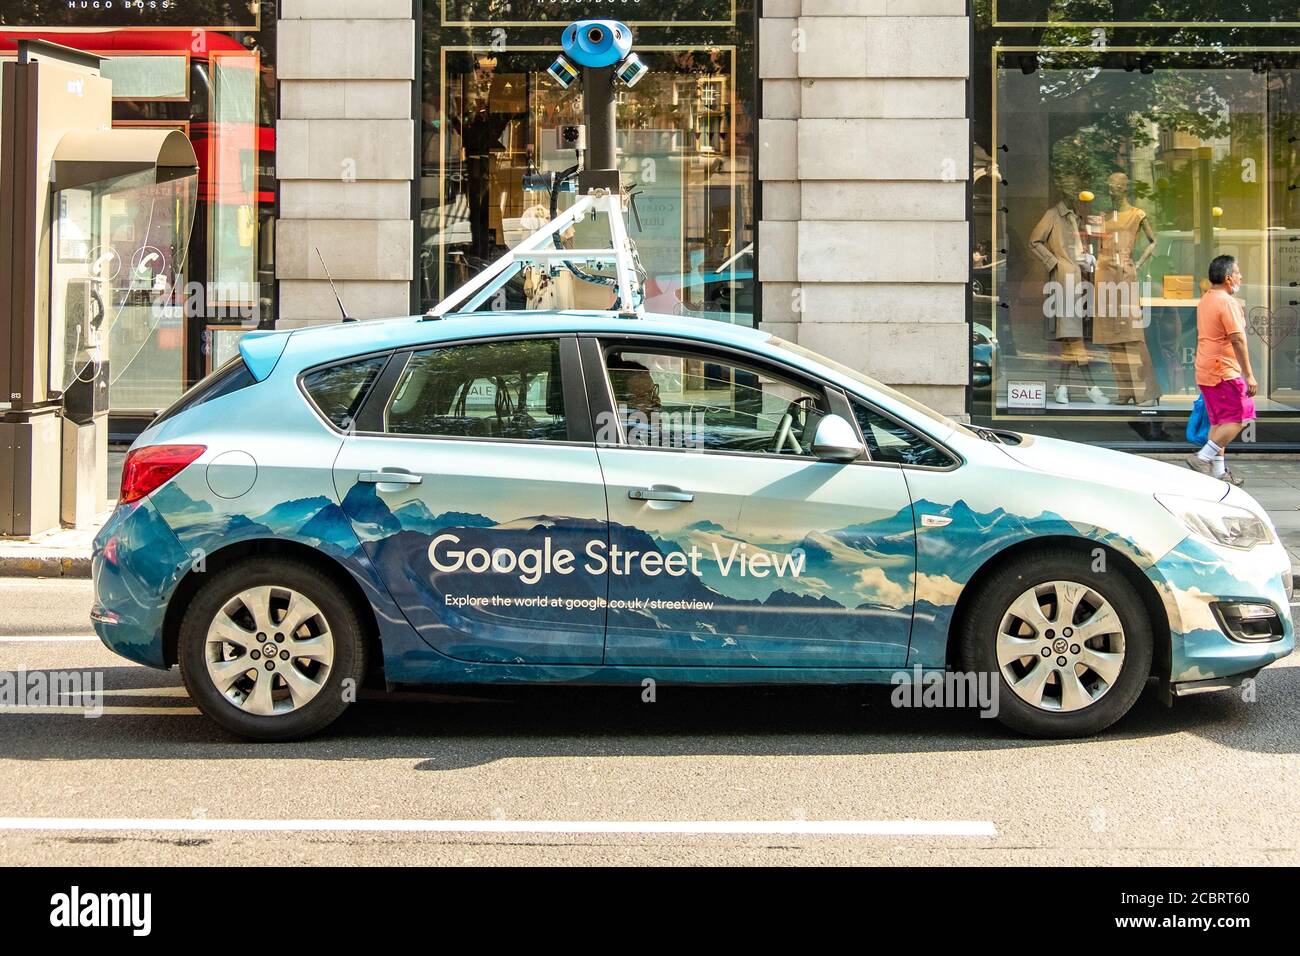 Google street view kamera auto -Fotos und -Bildmaterial in hoher